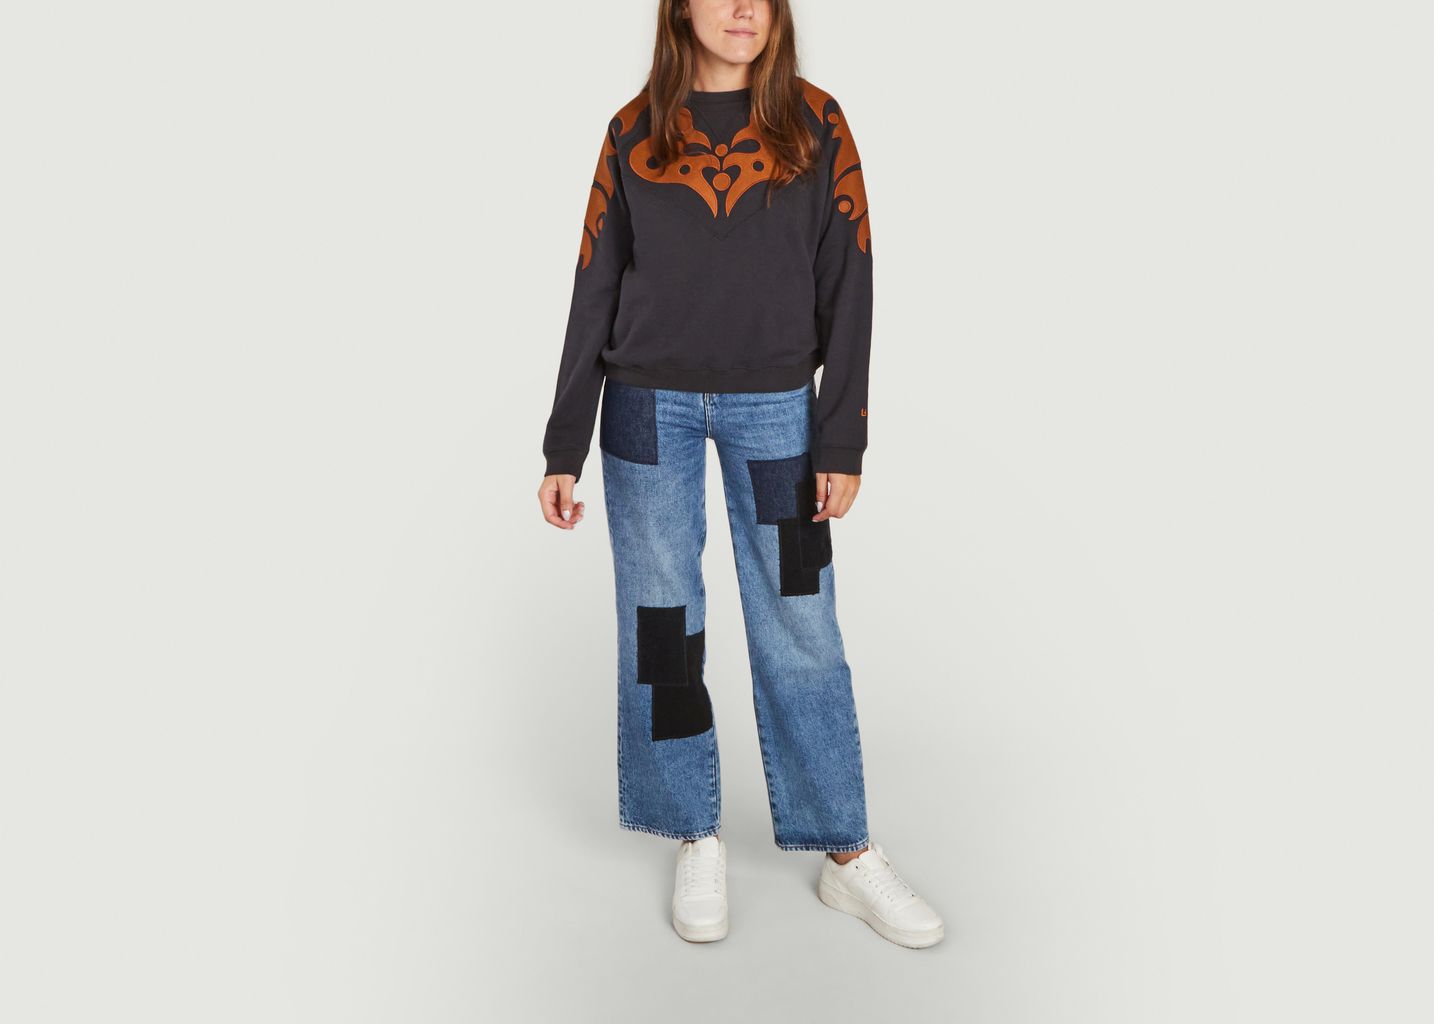 Super Feutra Sweatshirt  - Leon & Harper